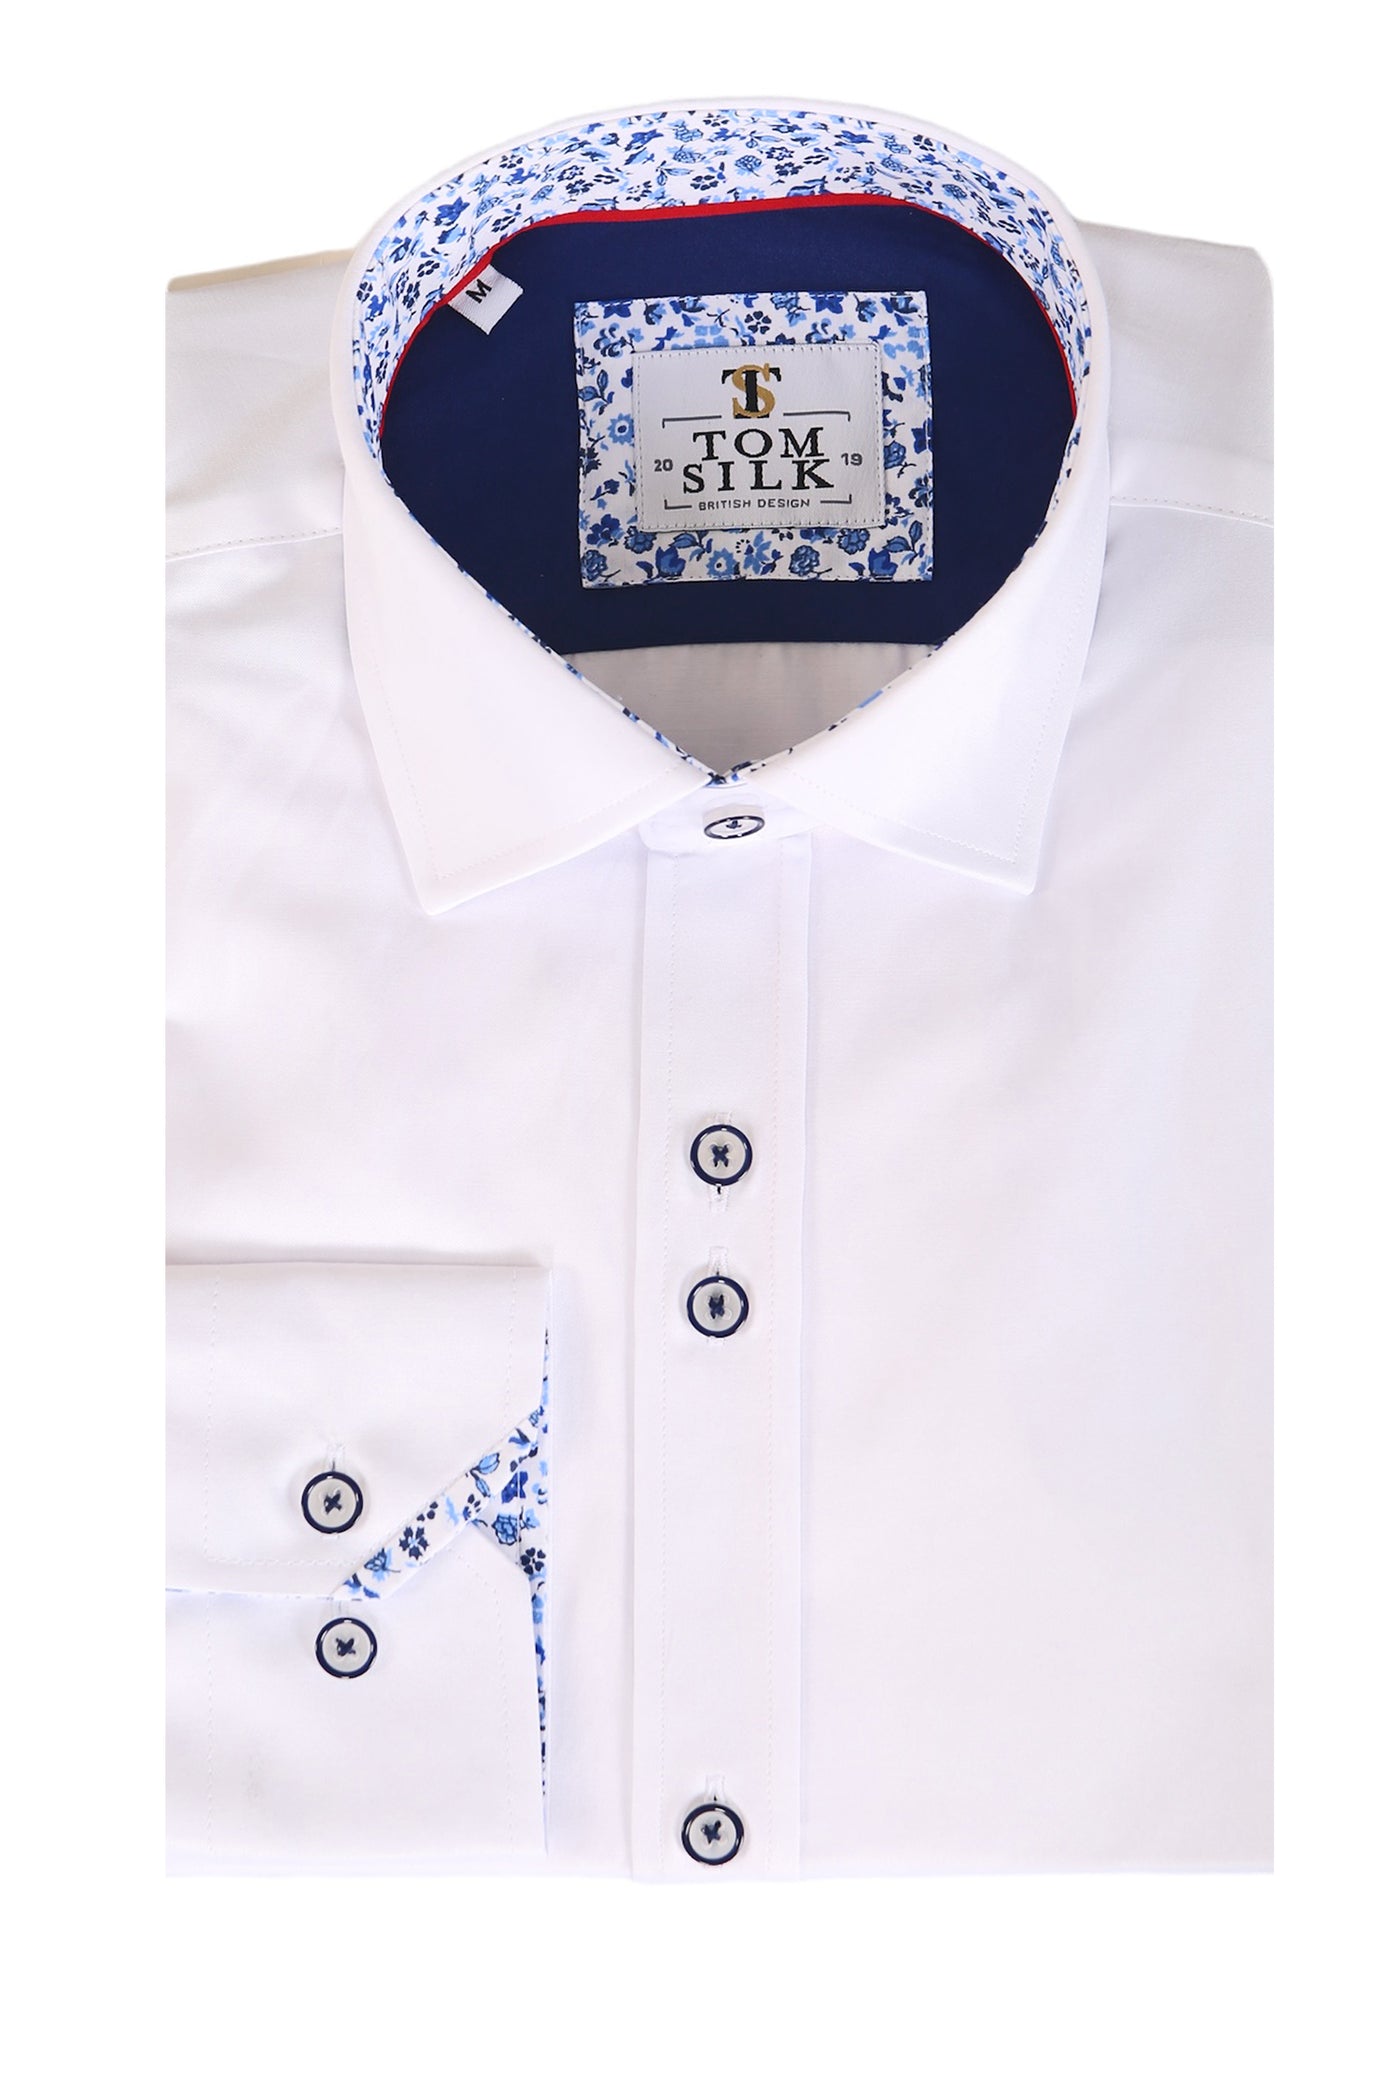 Tom Silk - White Contrast Button Long Sleeve Shirt